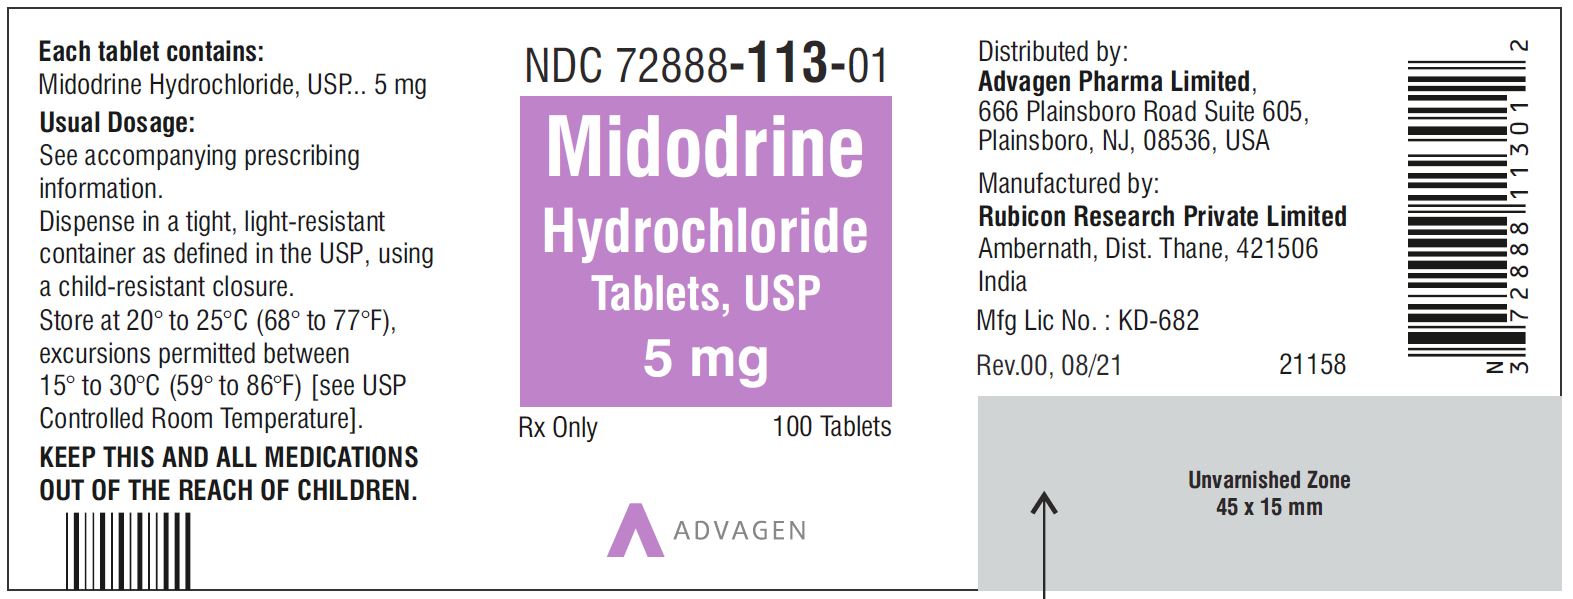 Midodrine Hydrochloride Tablets, USP 5mg - 100 Tablets - NDC 72888-113-01